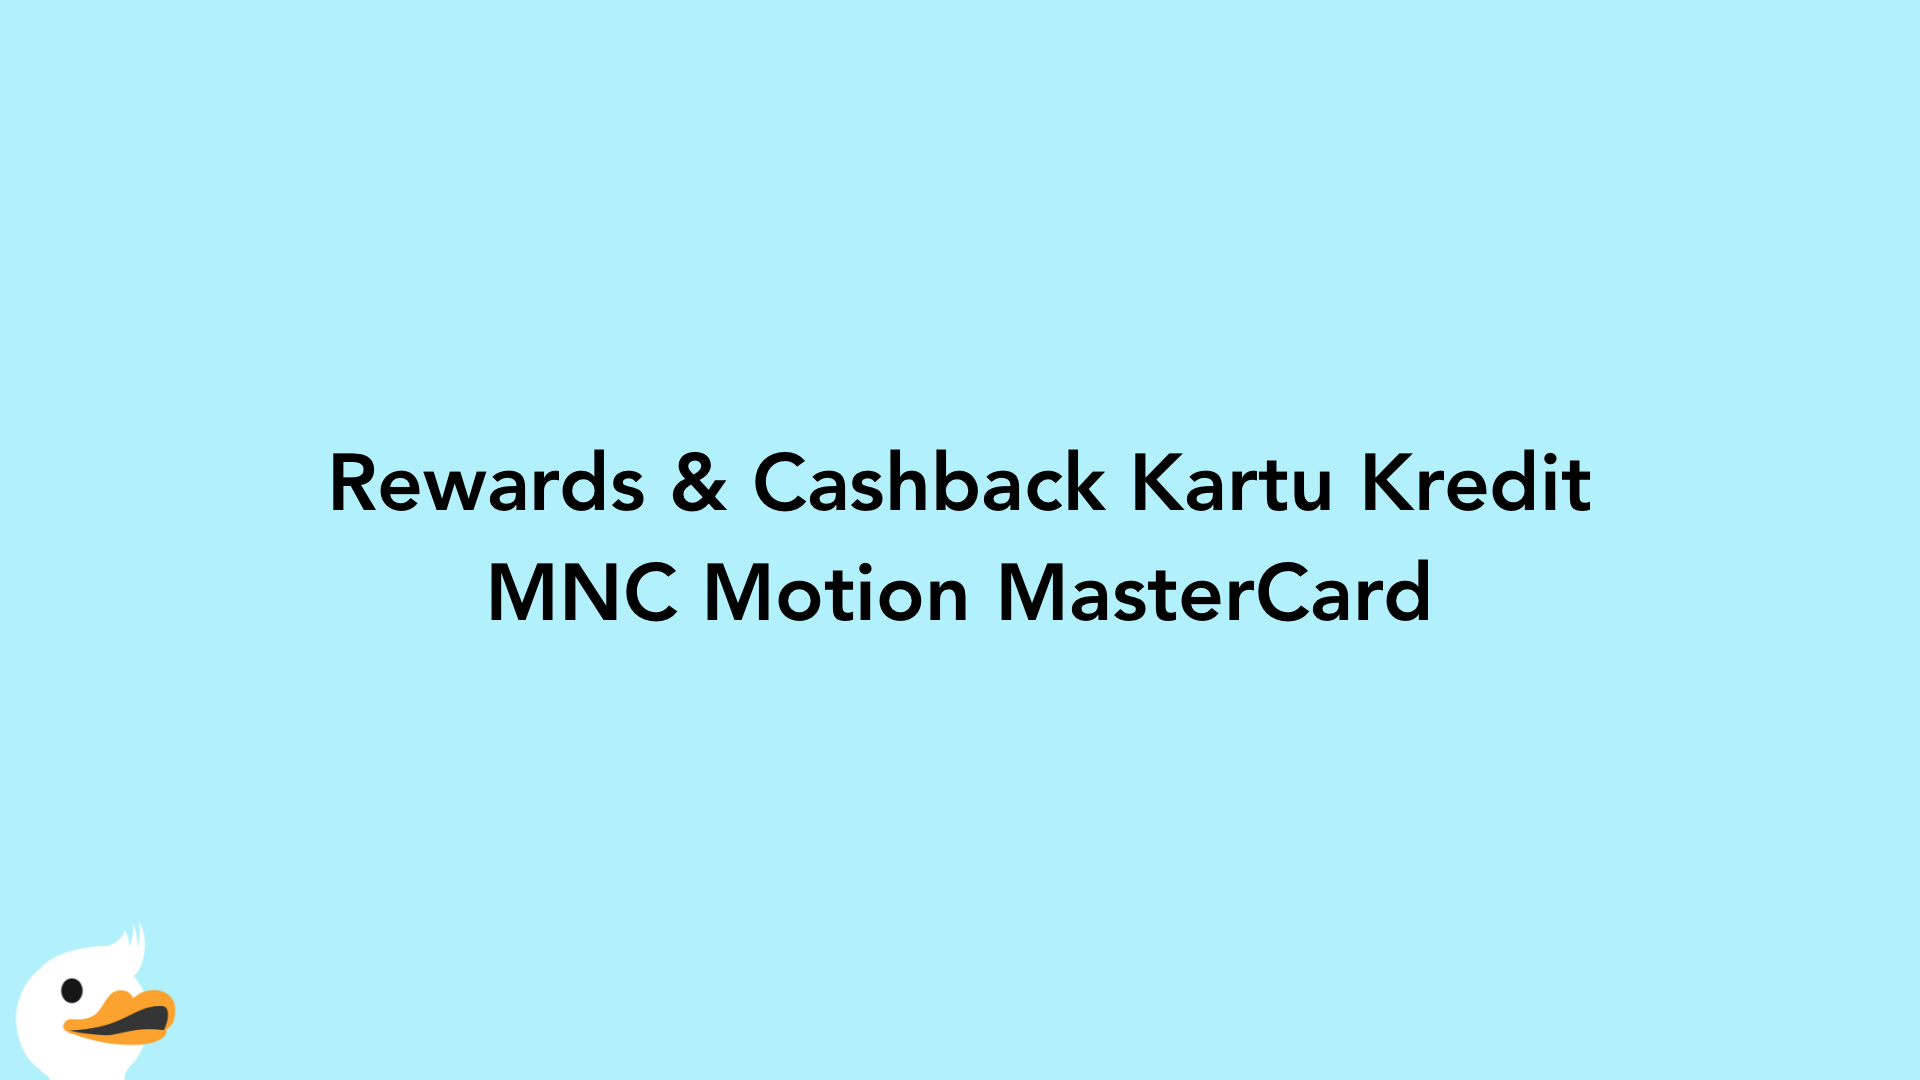 Rewards & Cashback Kartu Kredit MNC Motion MasterCard